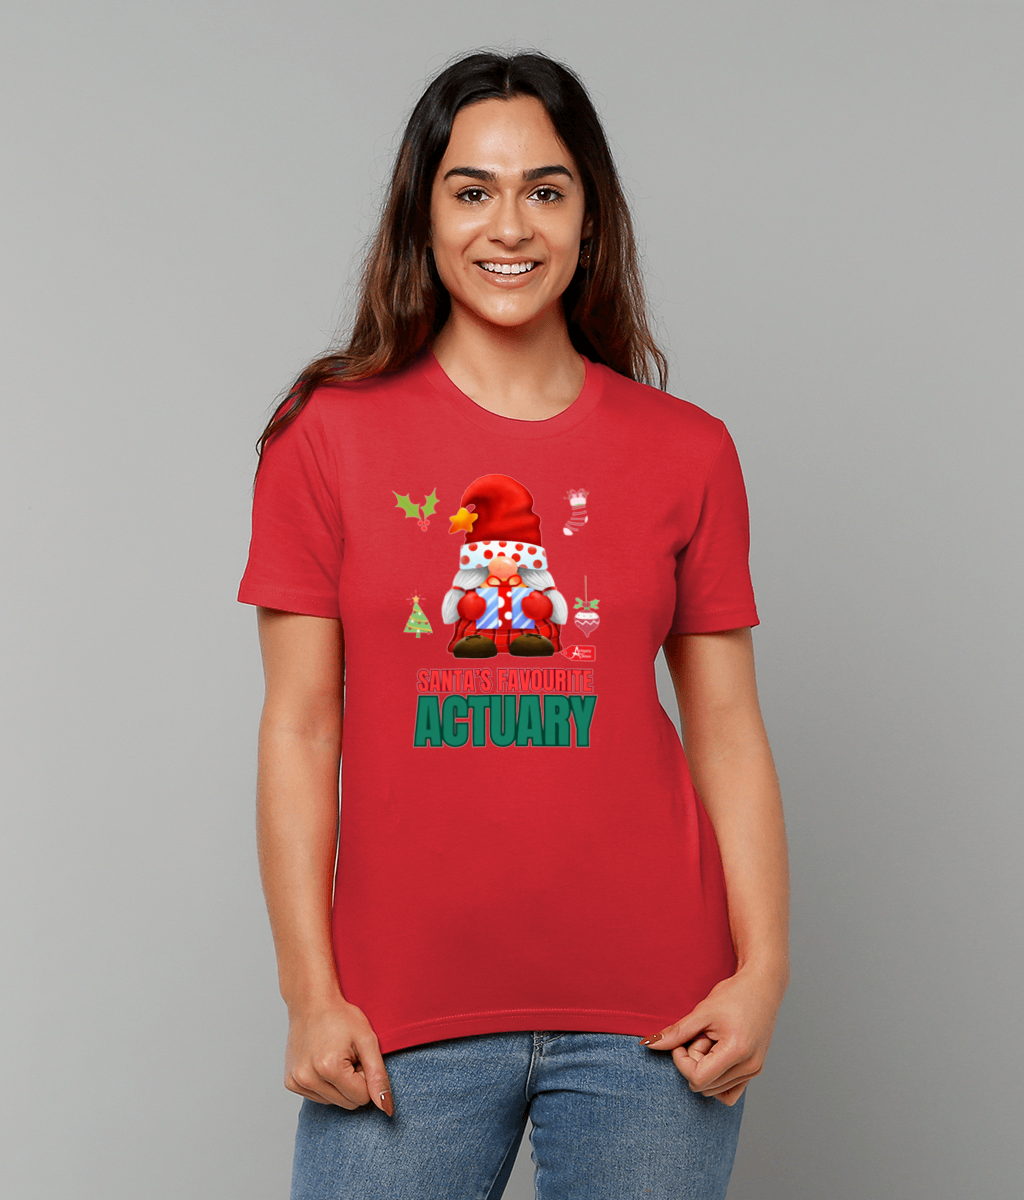 Santa's Favourite Actuary Christmas Santa Gnome T-Shirt (Red, Green, White Variations)